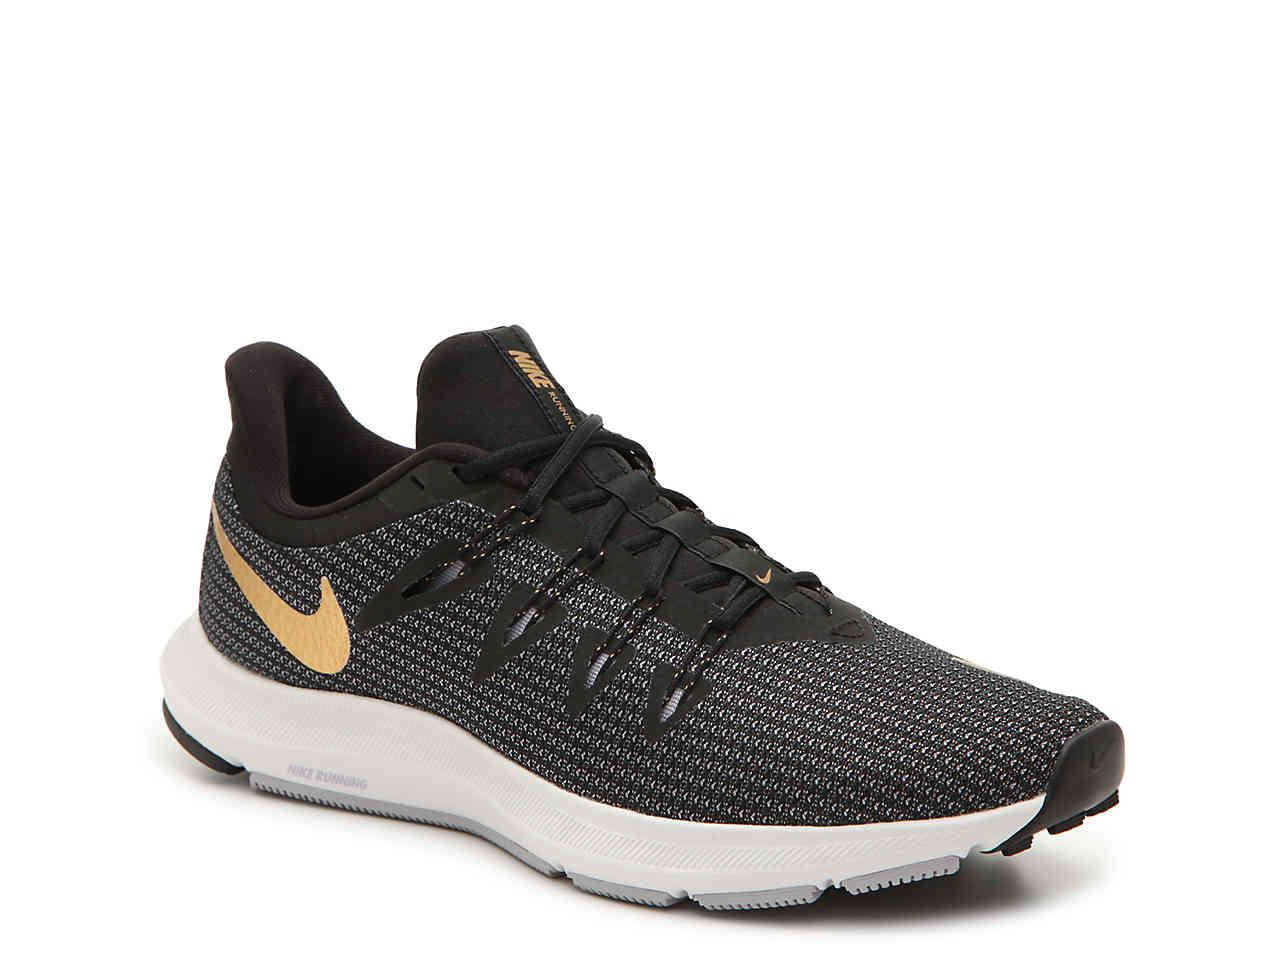 Nike Rubber Quest Lightweight Running Shoe in Black//Gold Metallic (Black)  - Lyst